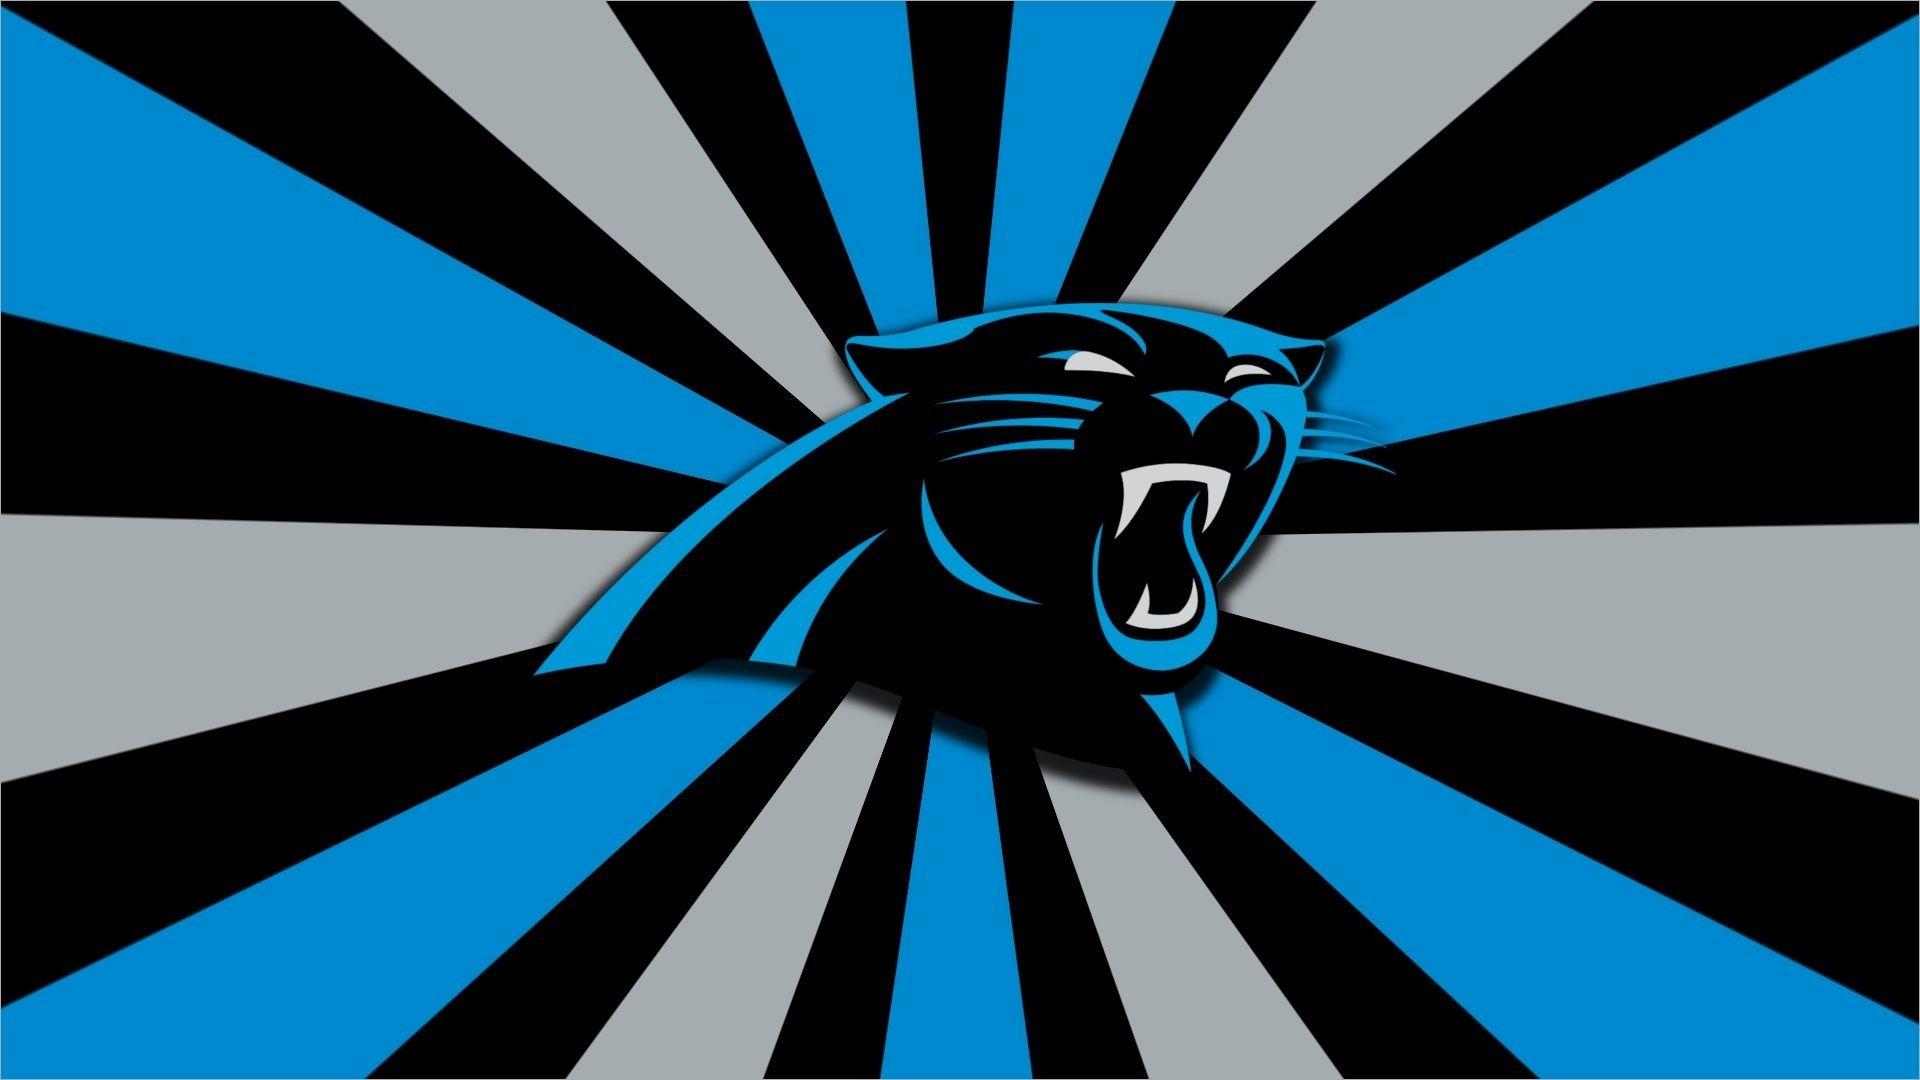 Panthers Logo - carolina panthers logo pictures - 1001+ Health Care Logos ...